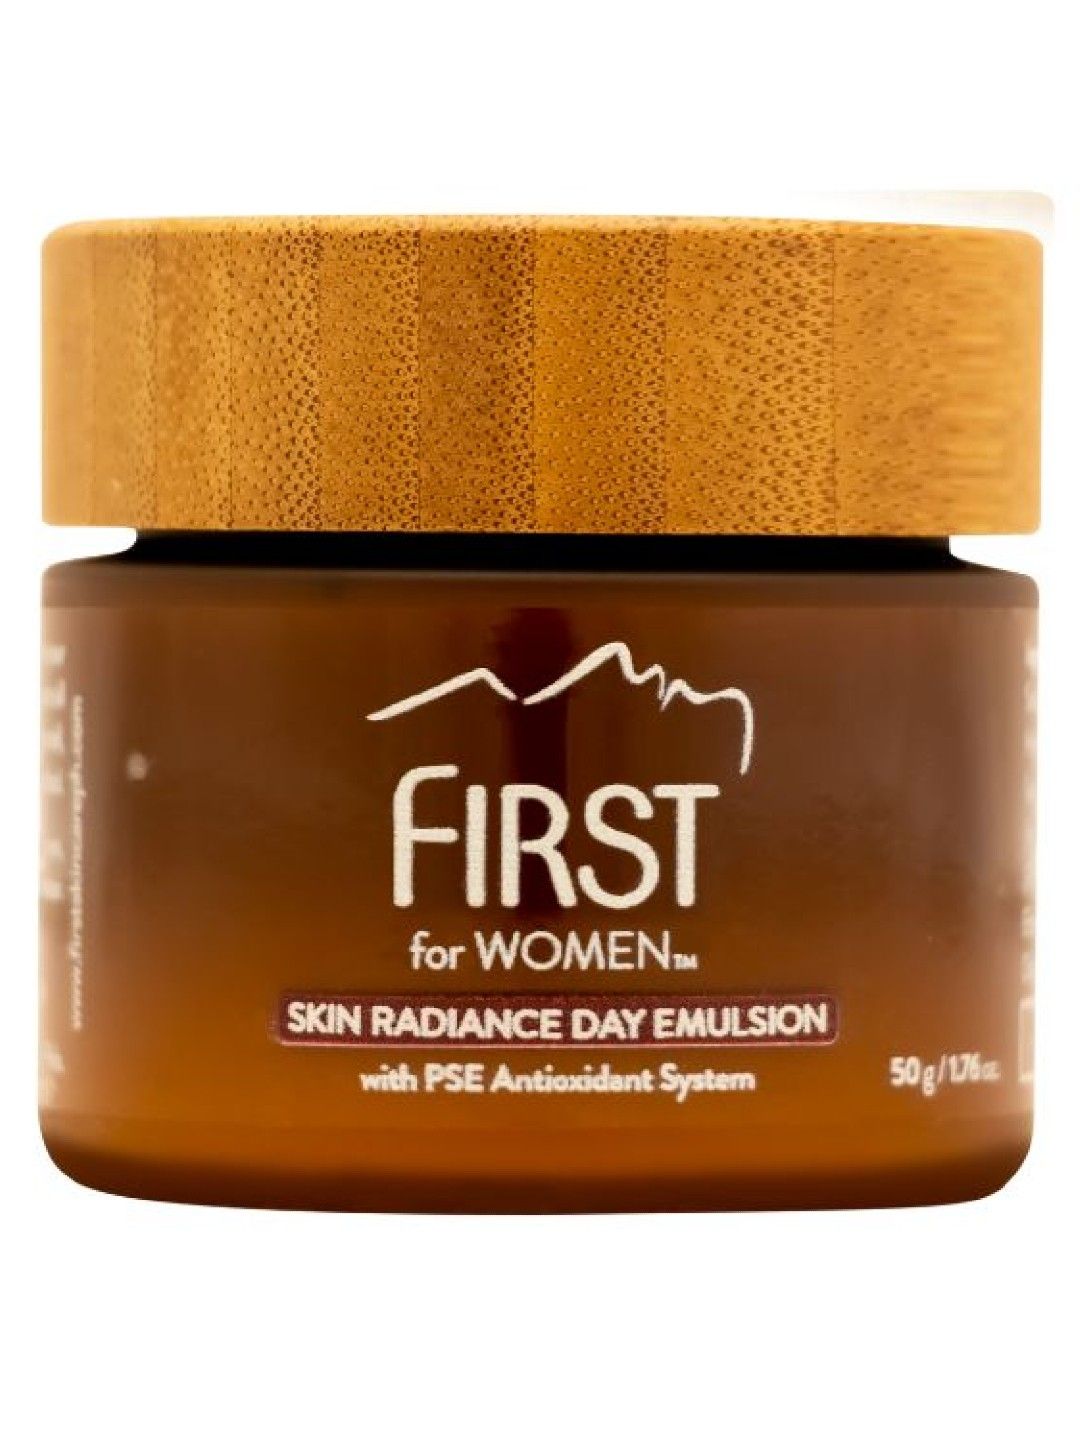 FIRST for Women Skin Radiance Day Emulsion (50g)